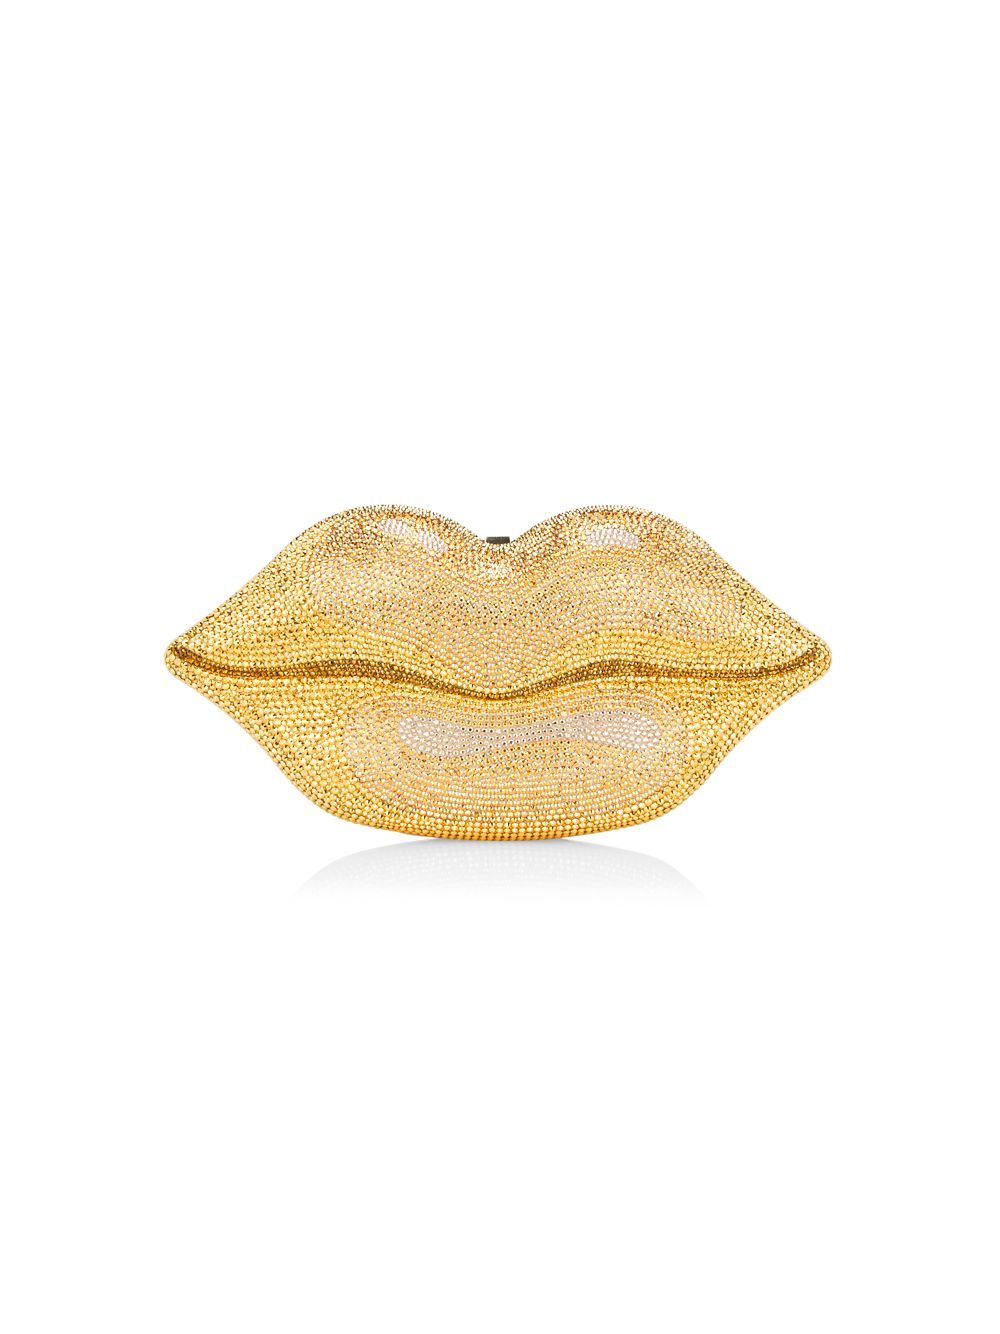 Сумка на плечо Hot Lips с кристаллами Judith Leiber Couture сумка на плечо hot lips с кристаллами judith leiber couture